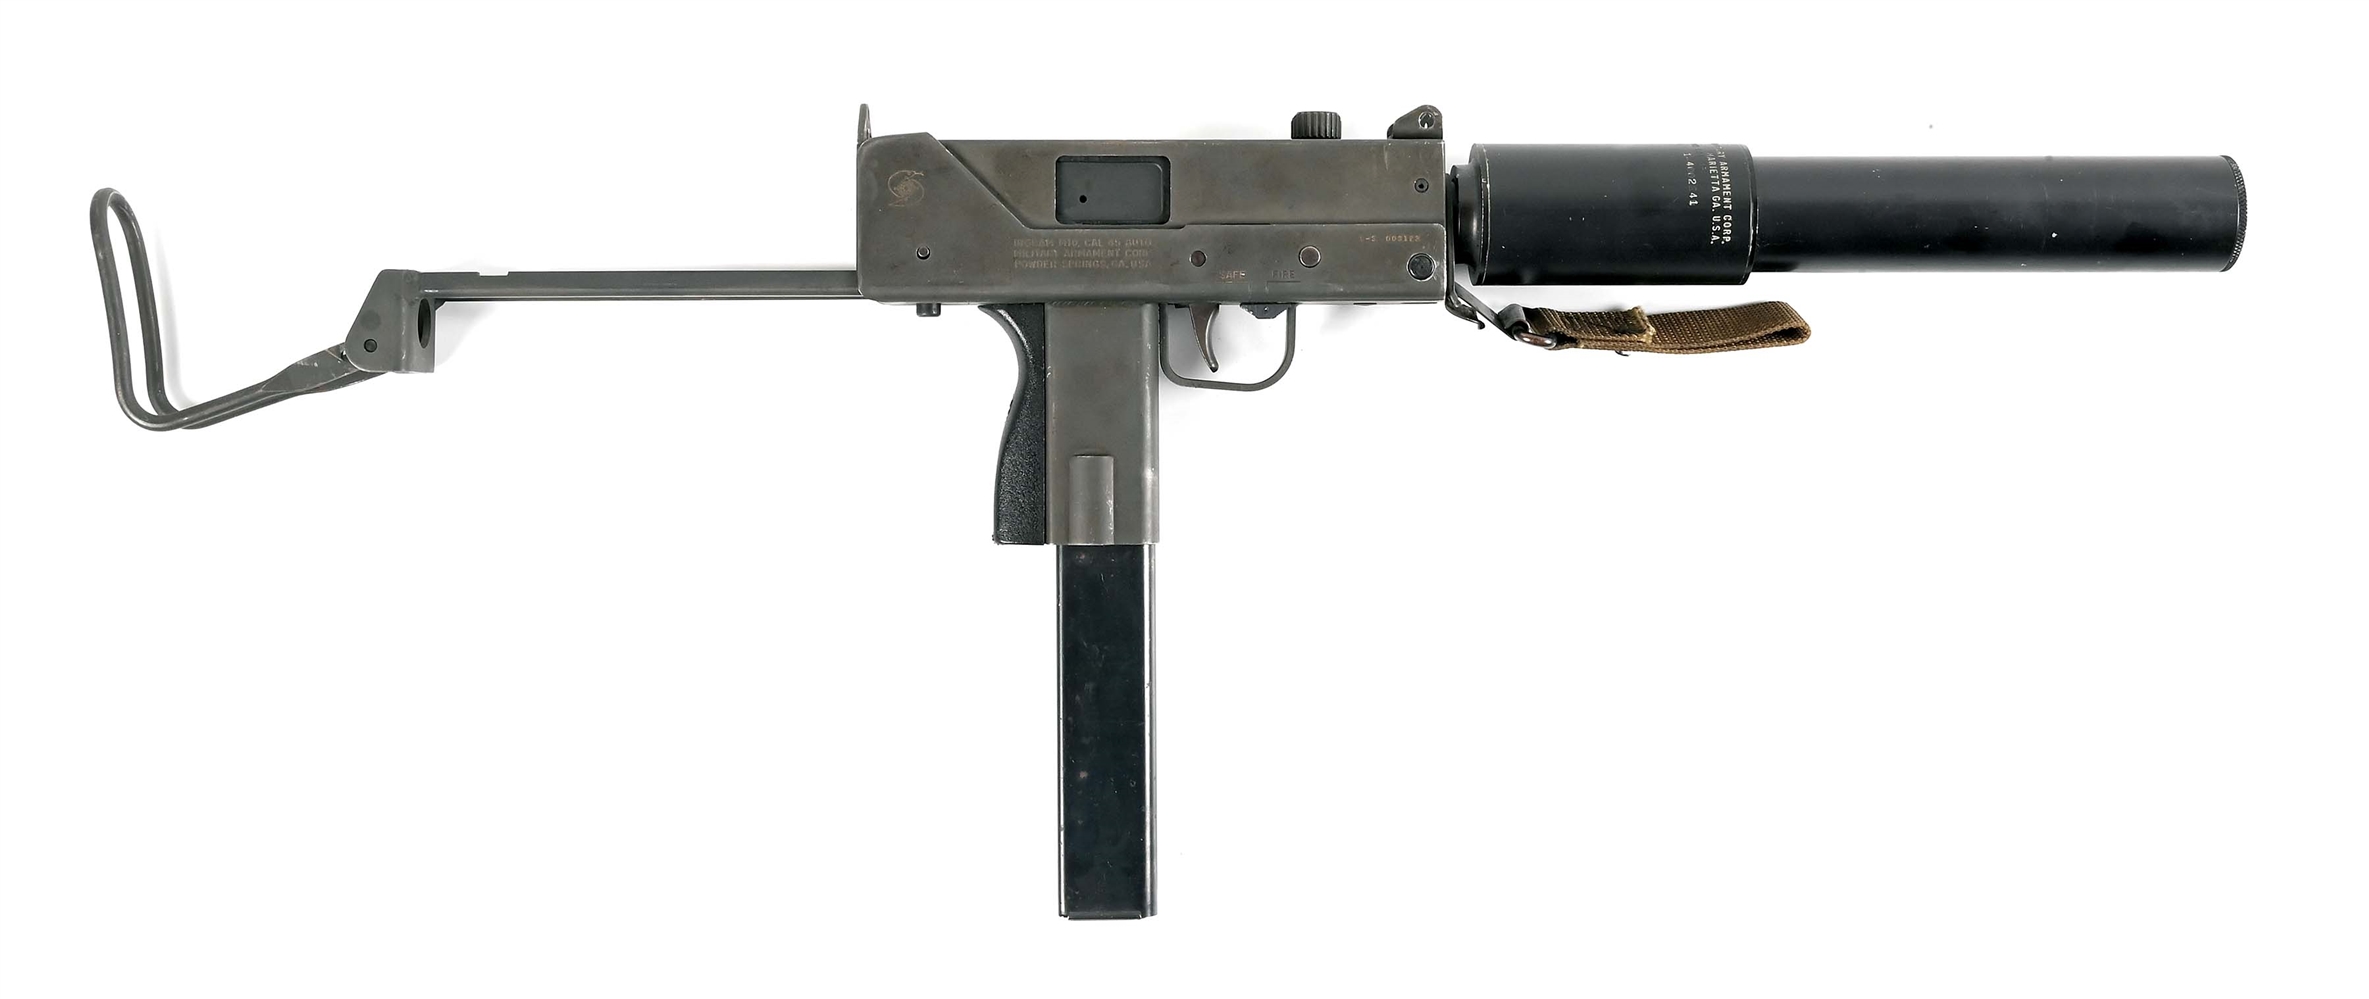 (N) POWDER SPRINGS INGRAM M10 SUBMACHINE GUN WITH MAC SILENCER & UNUSUAL "US" MARKING (FULLY TRANSFERABLE).